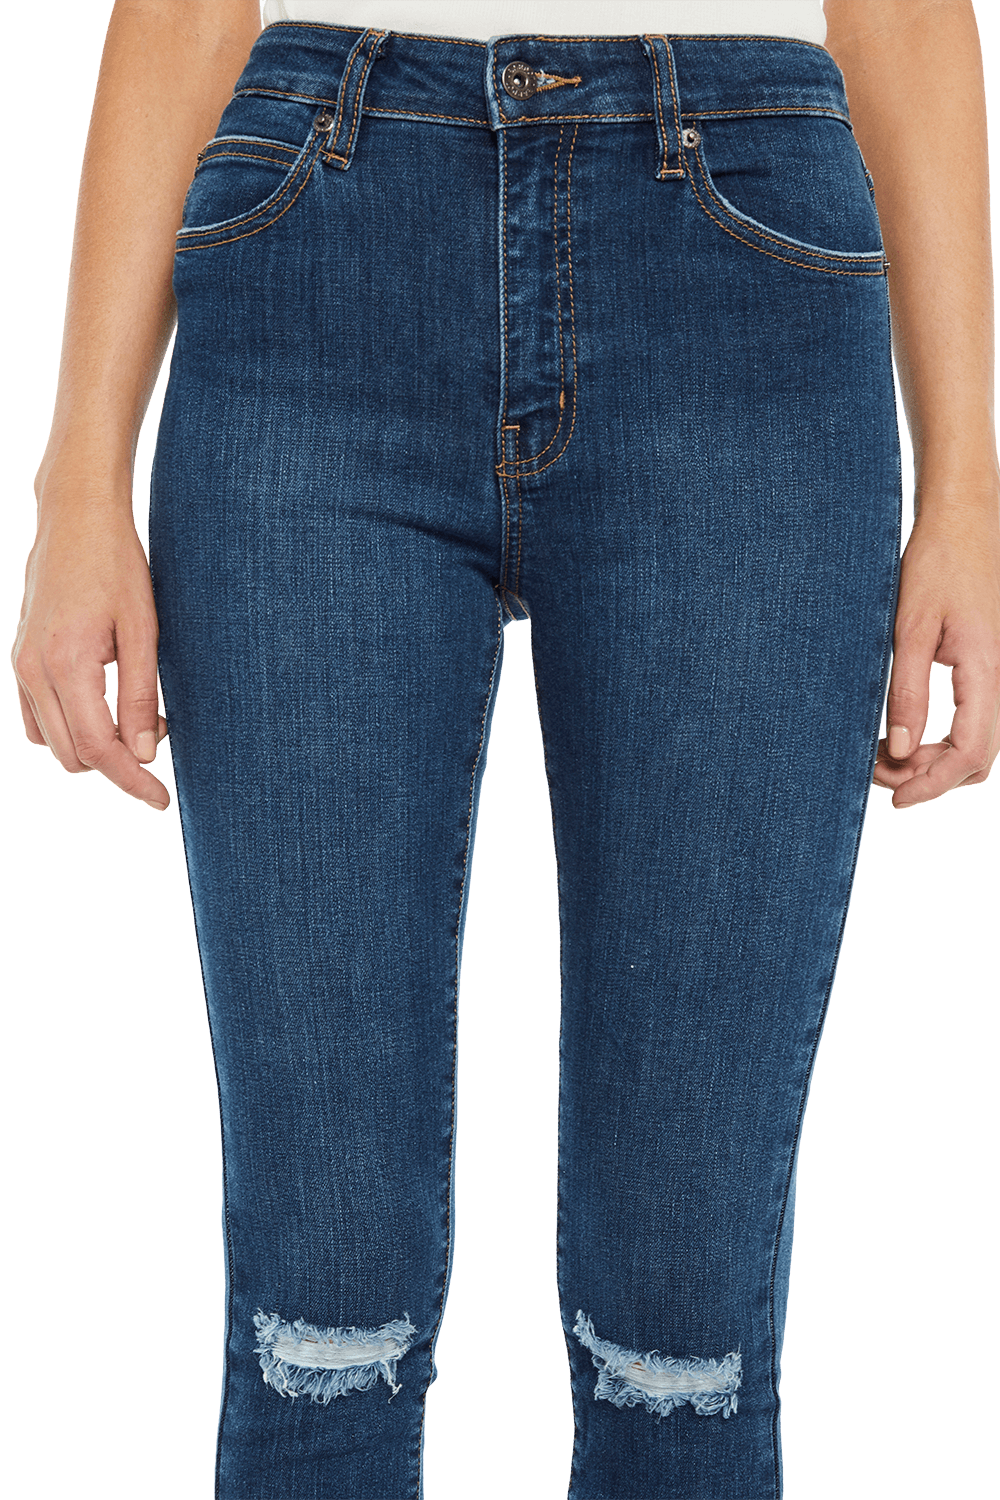 best women's jeans for curvy figures